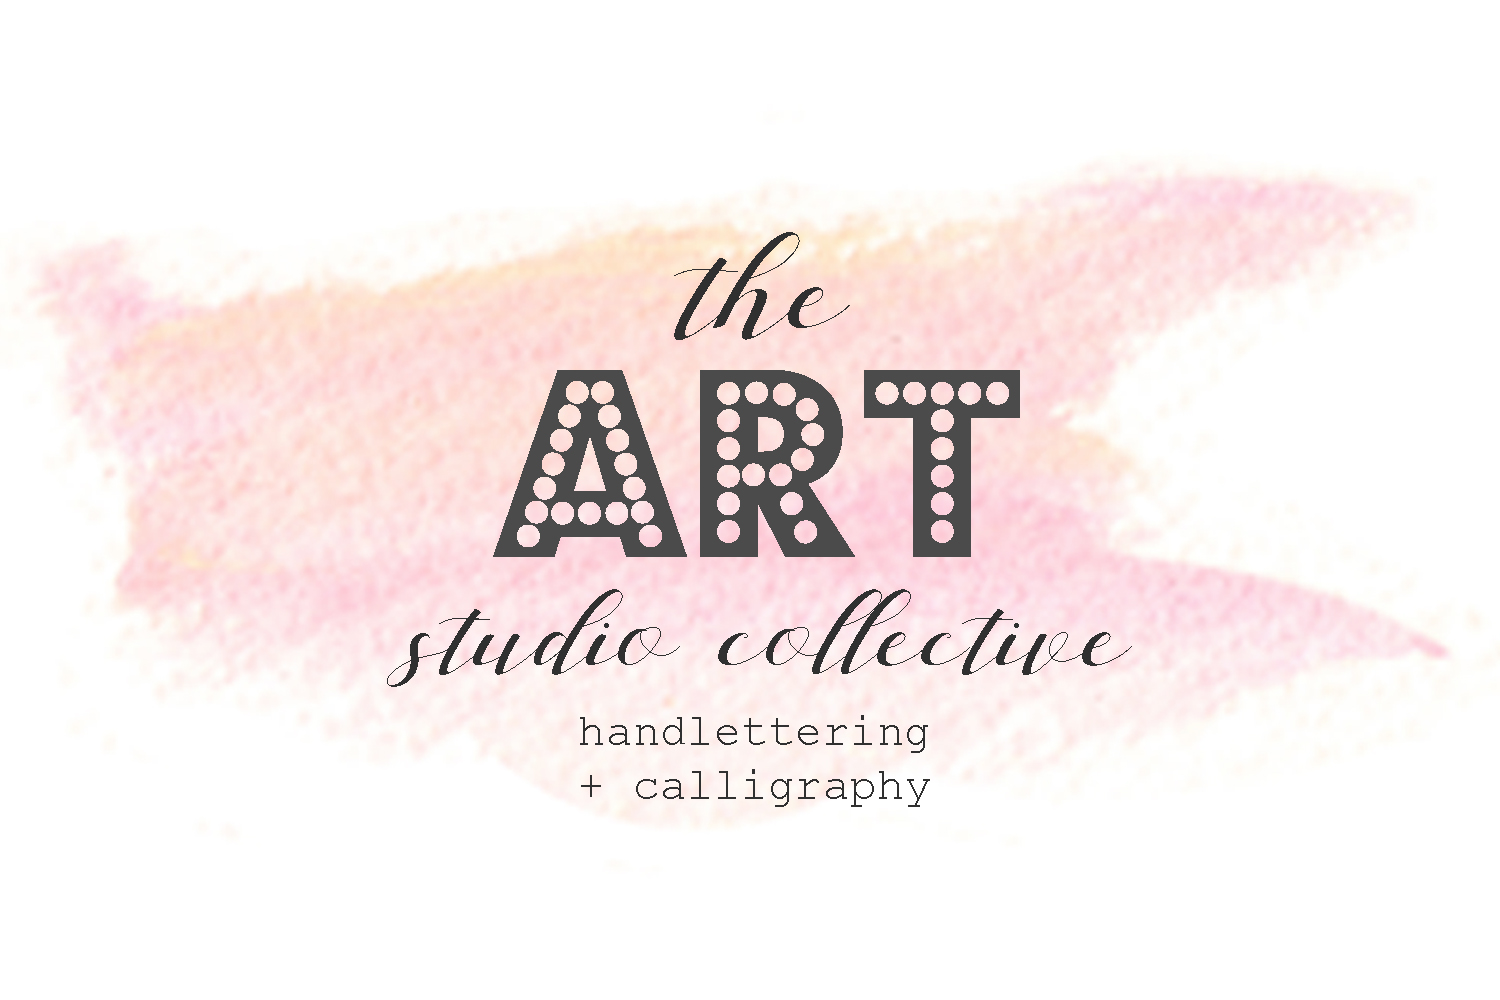 The Art Studio Collective